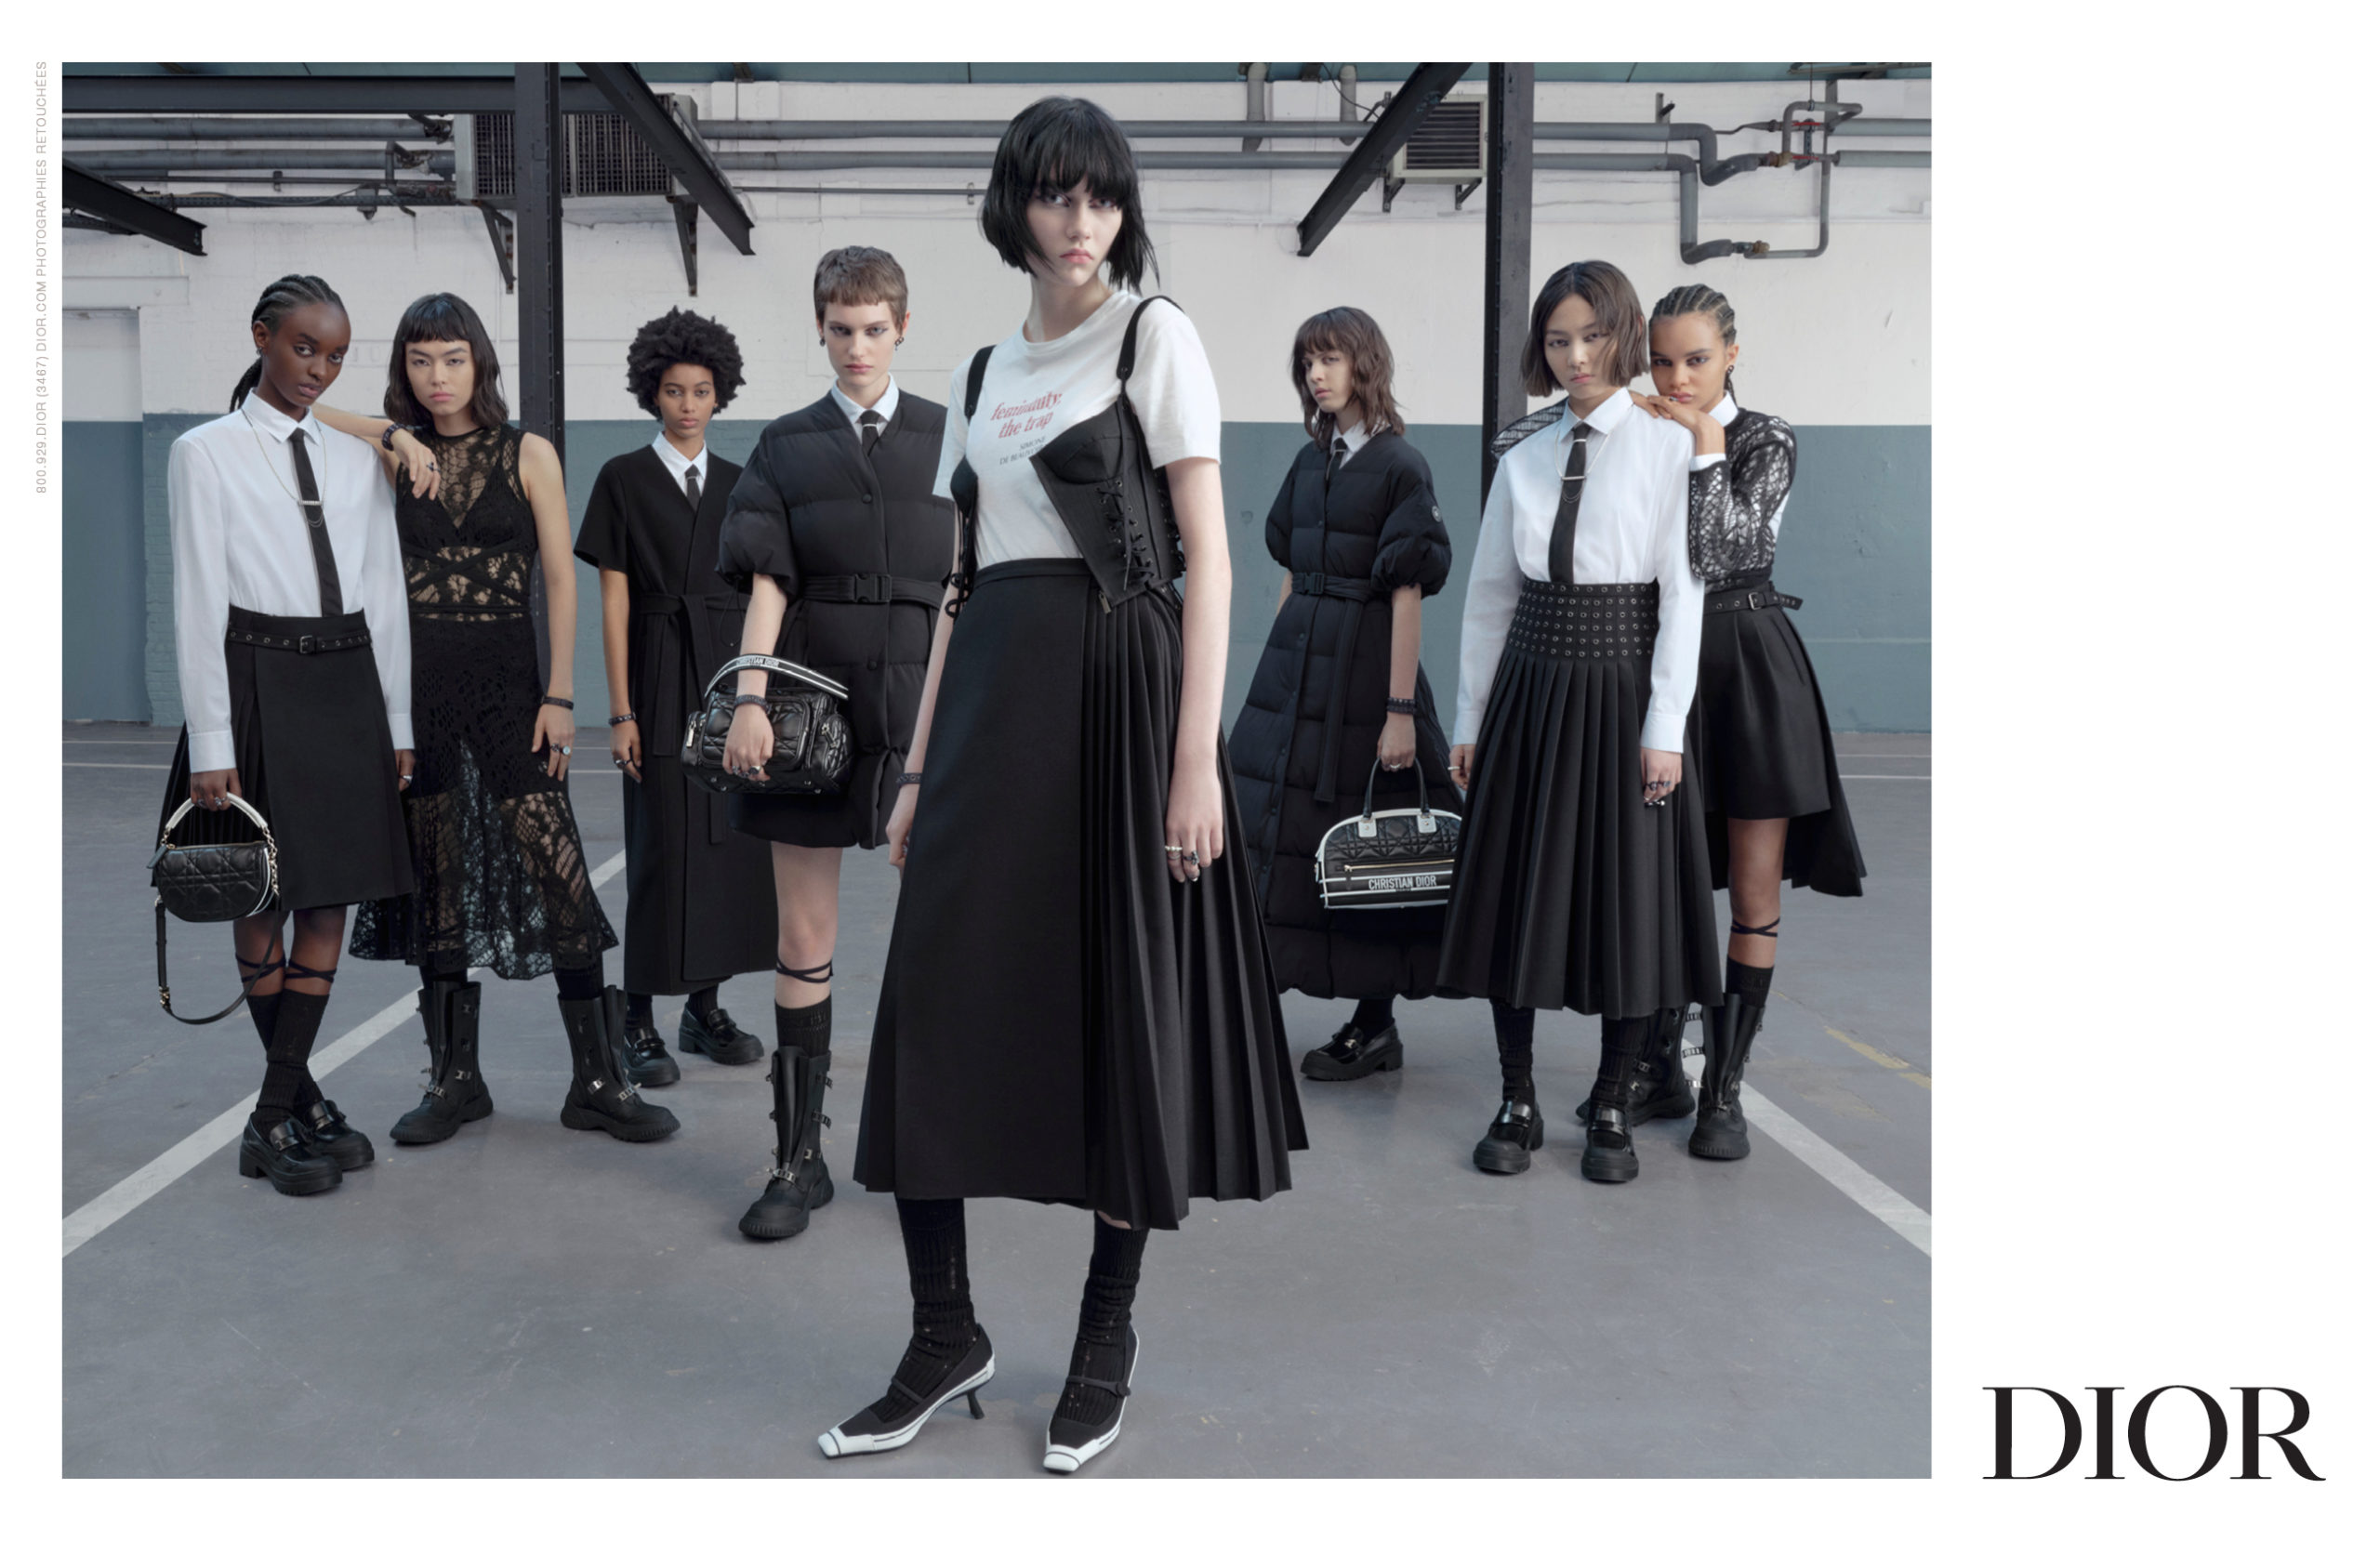 Dior's Latest Campaign Honors History - V Magazine